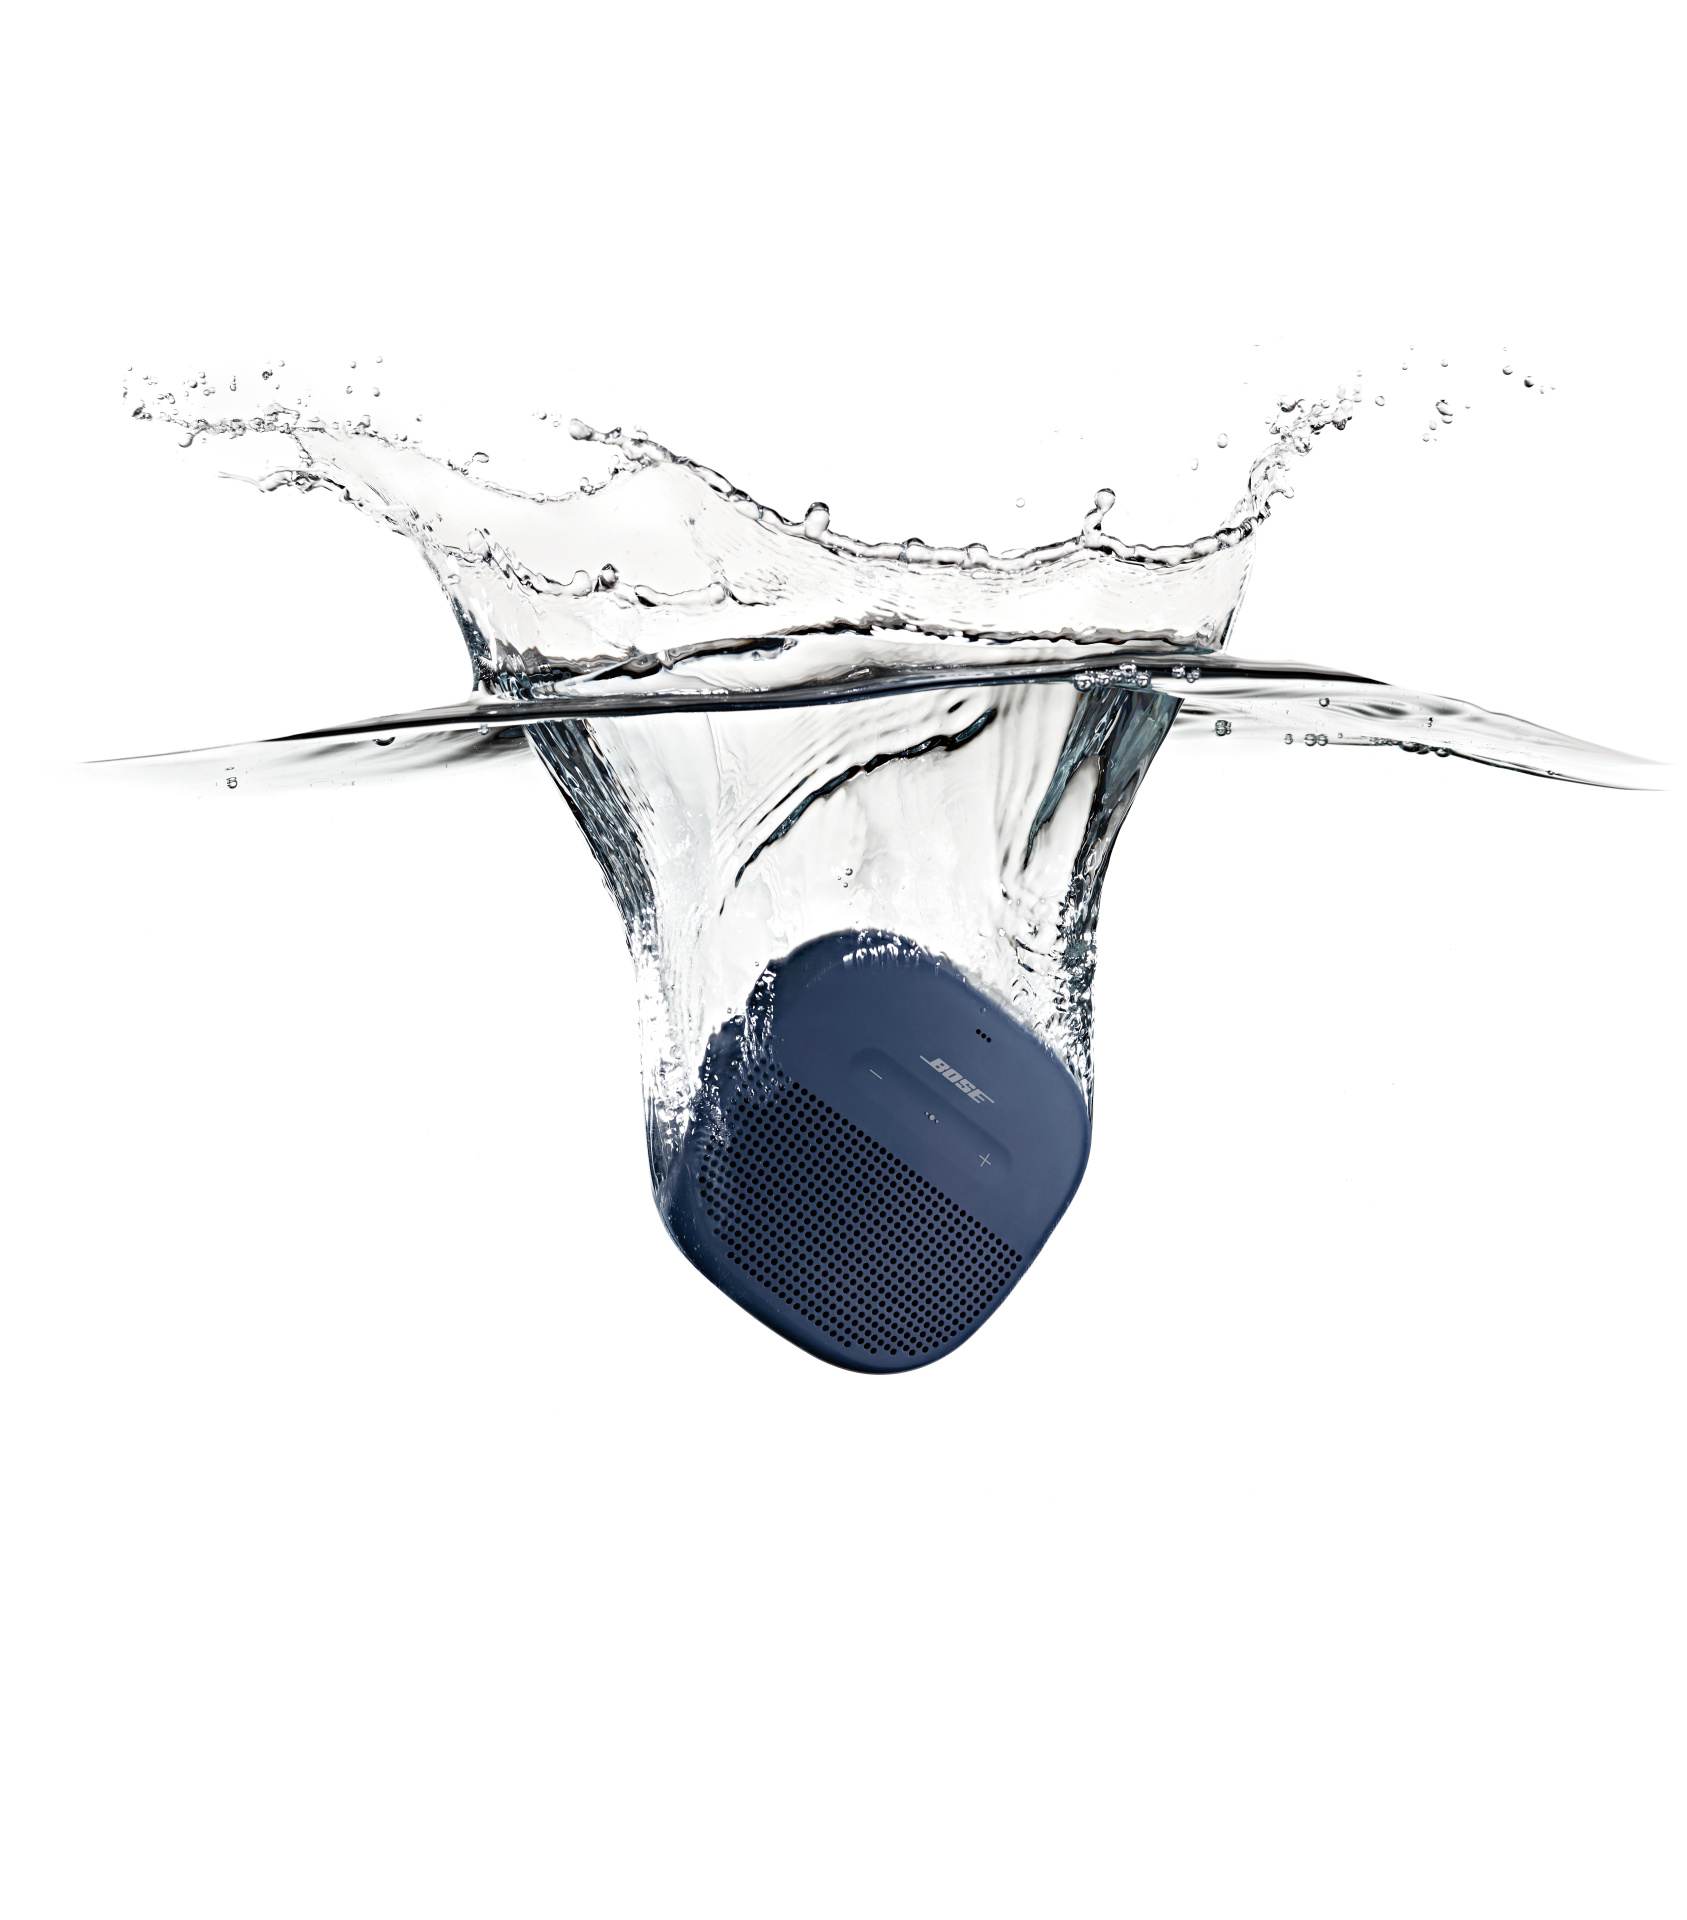 Bose SoundLink Micro Waterproof Wireless Portable Bluetooth Speaker, Blue - image 2 of 6